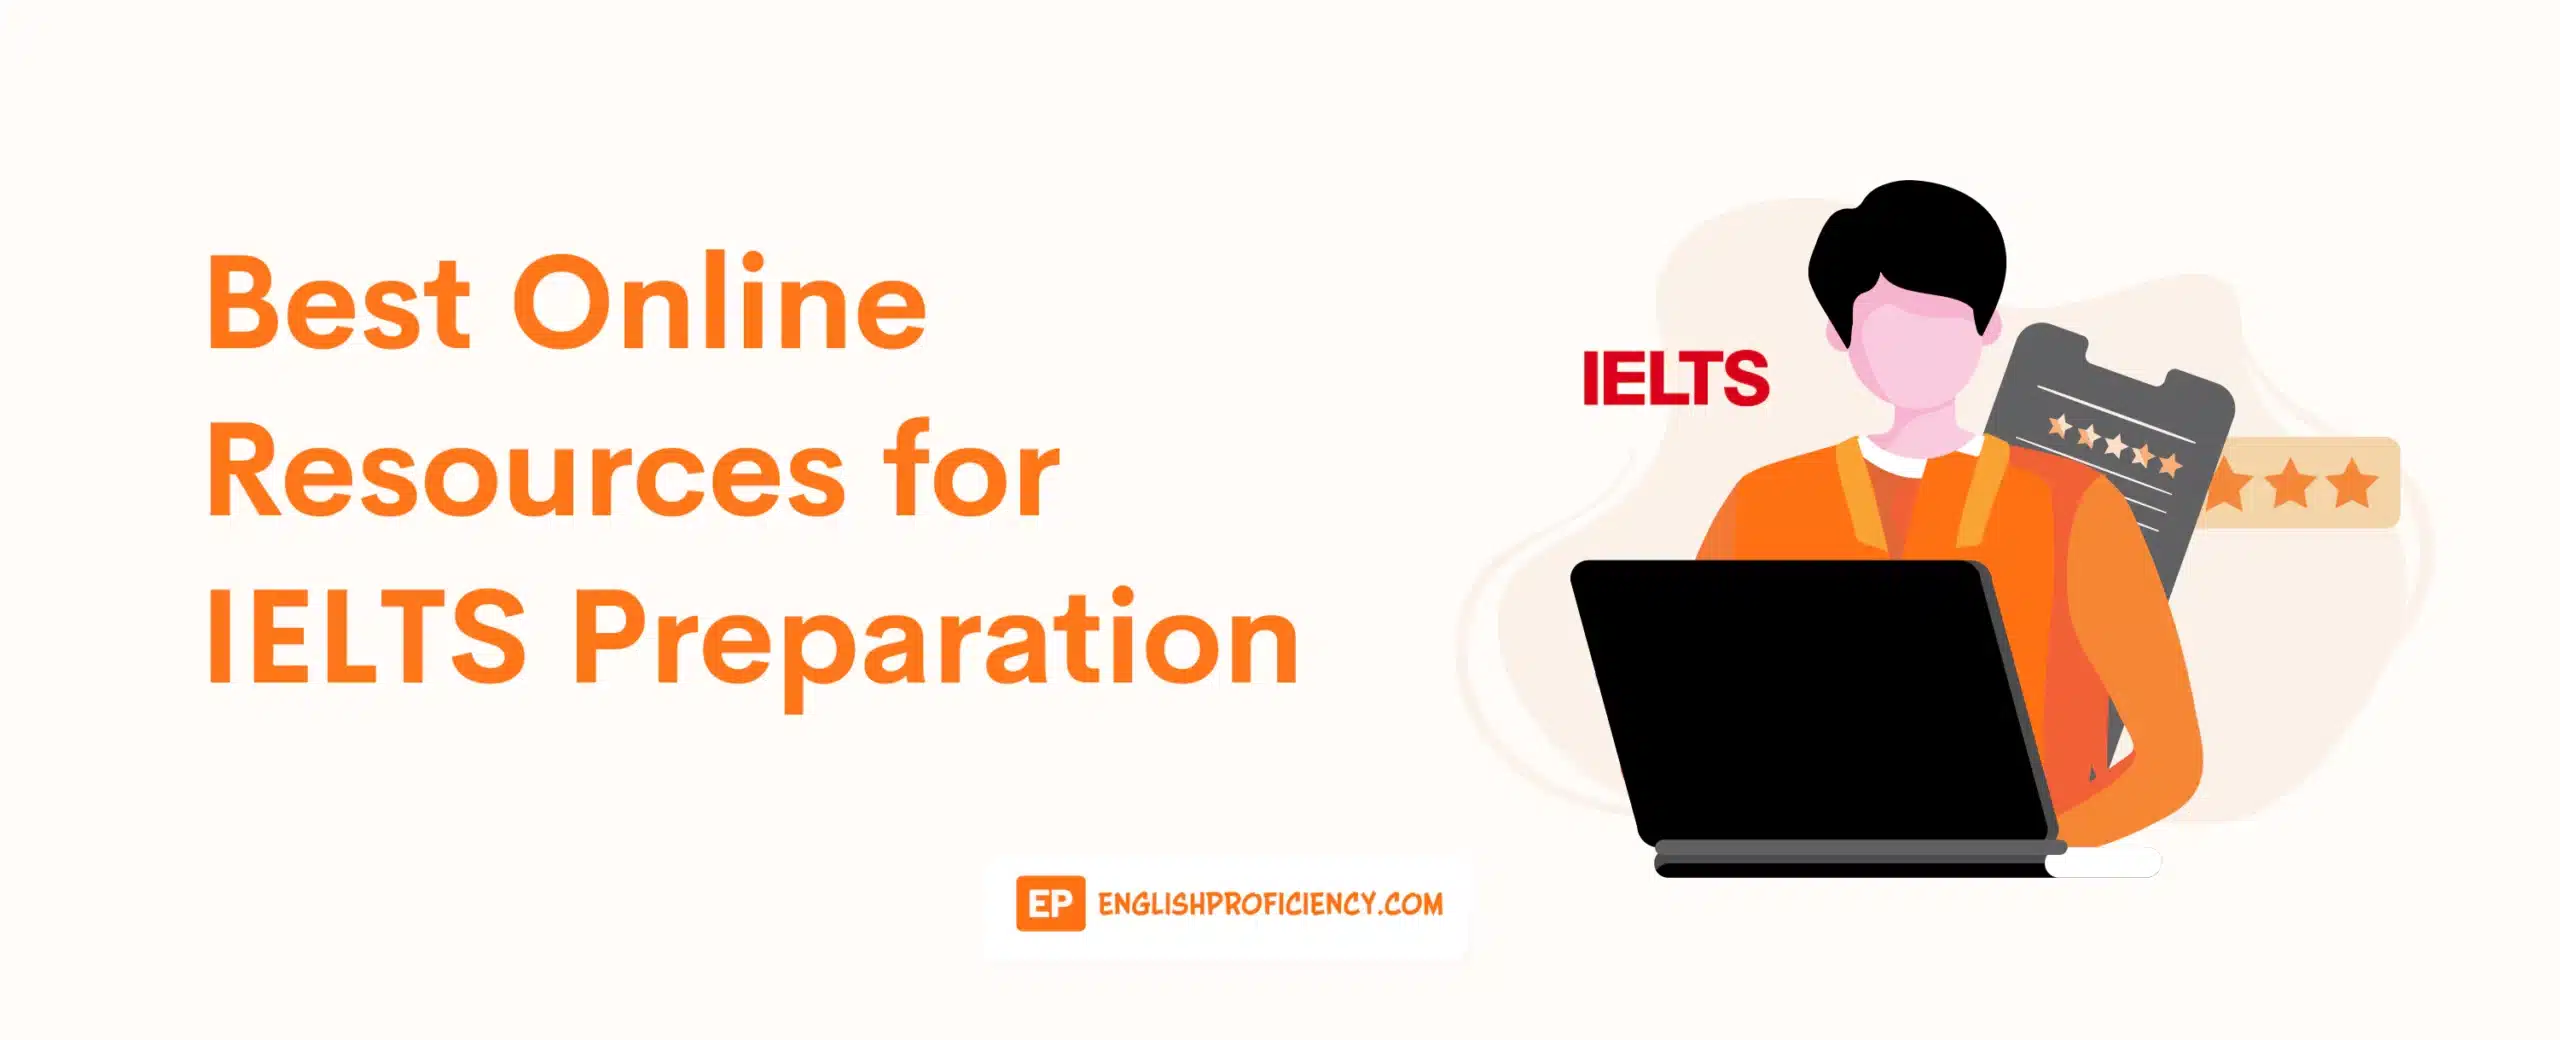 Best Online Resources for IELTS Preparation